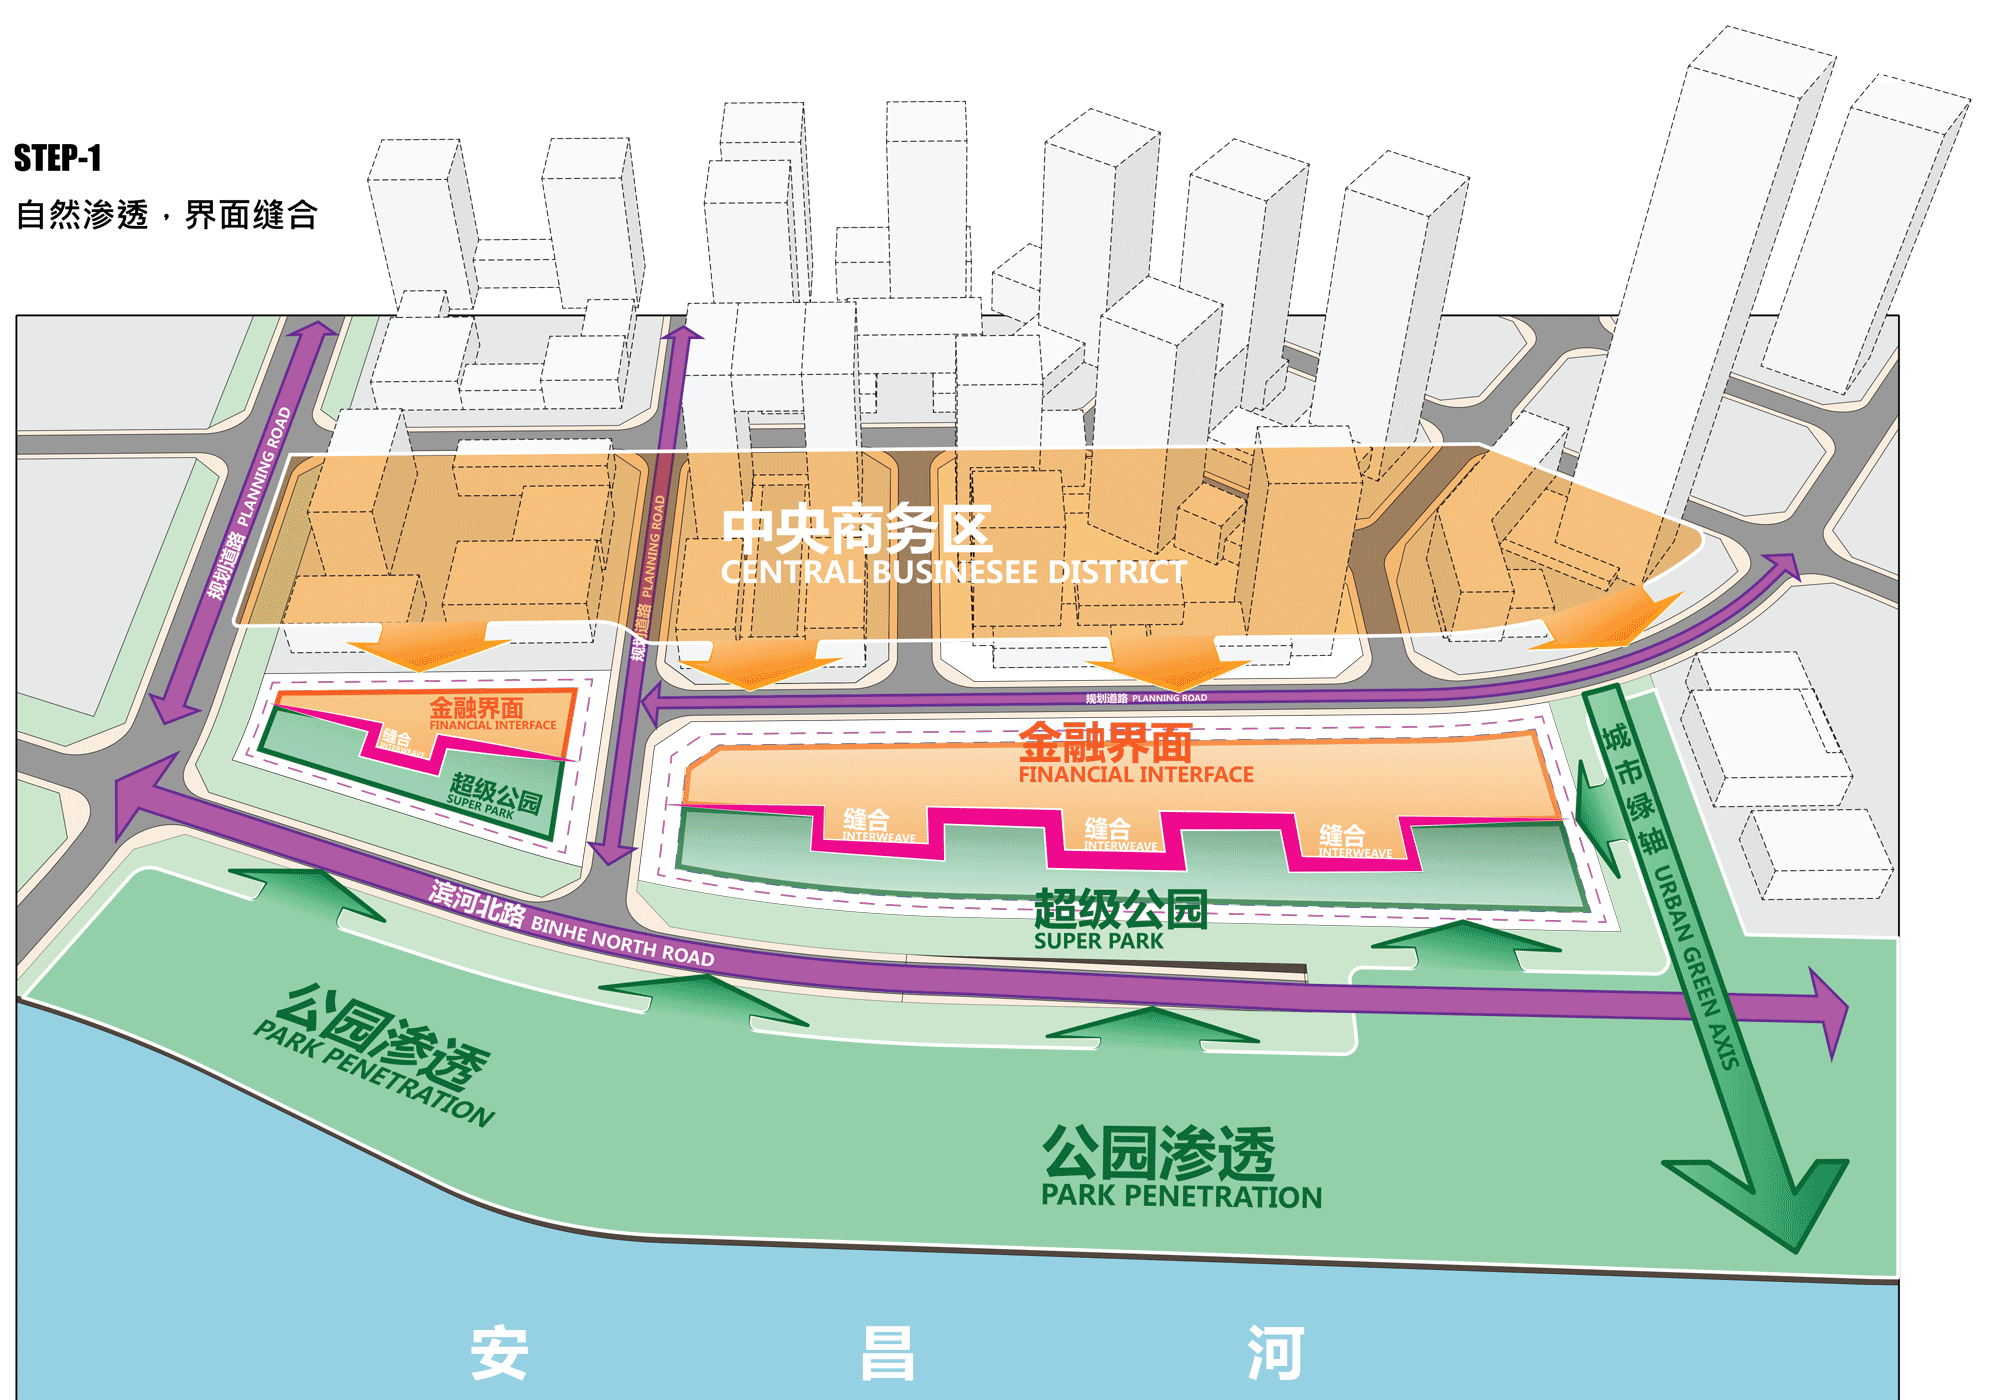 Planning development (shown in GIF)